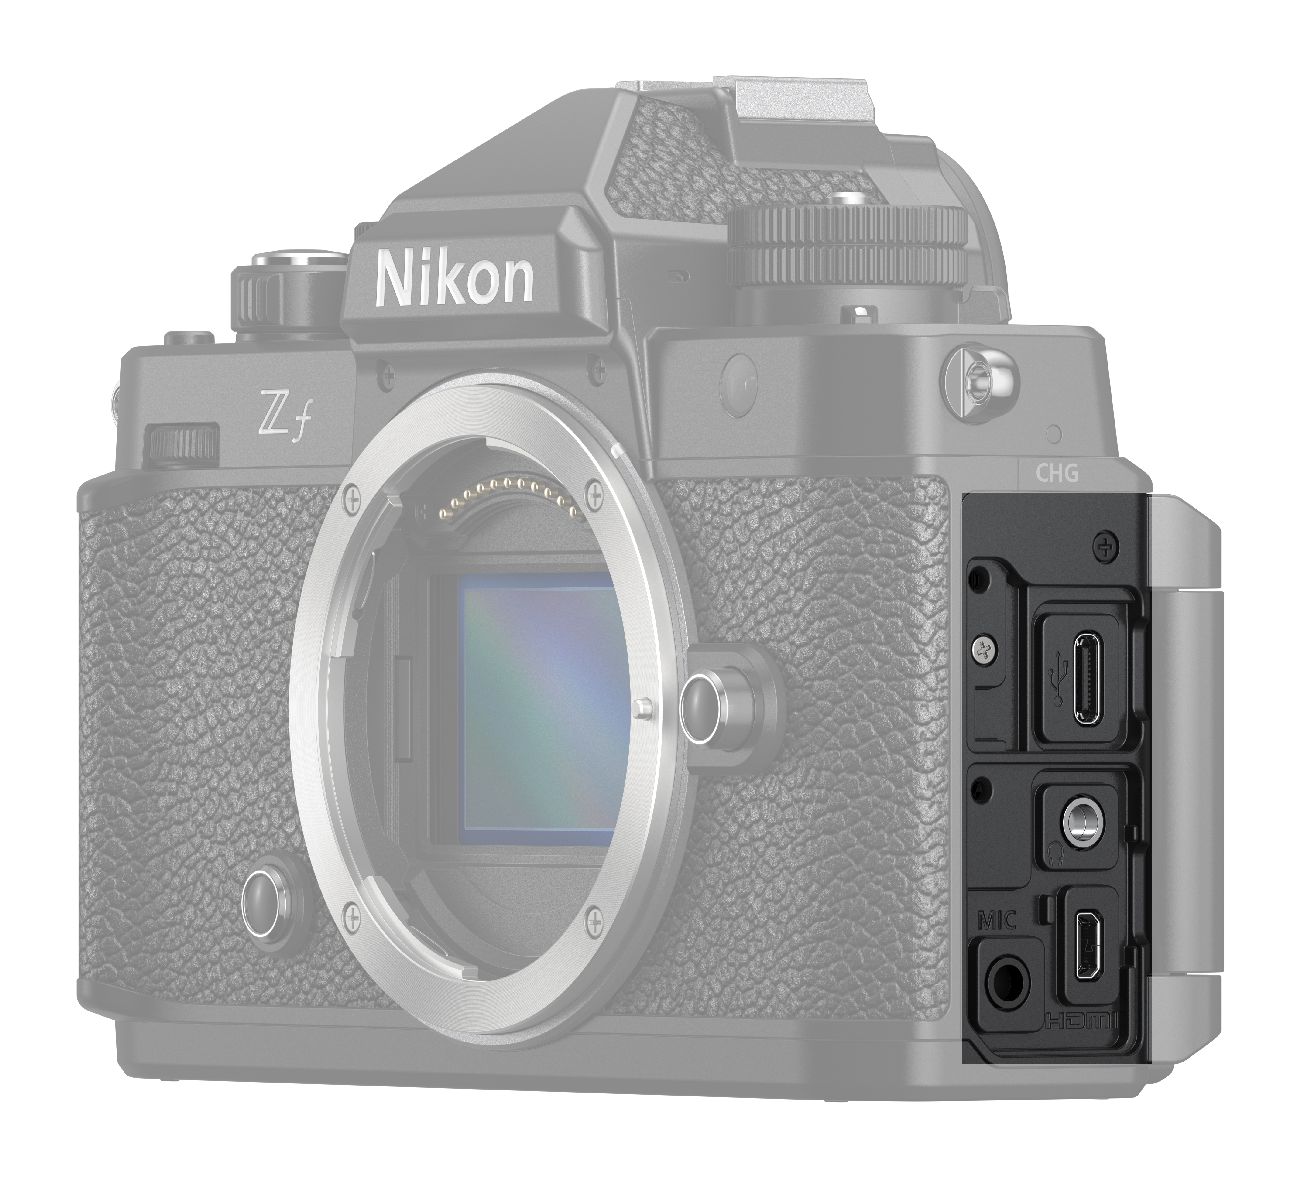 Nikon Z f Kit 40mm 2.0 SE sofort lieferbar